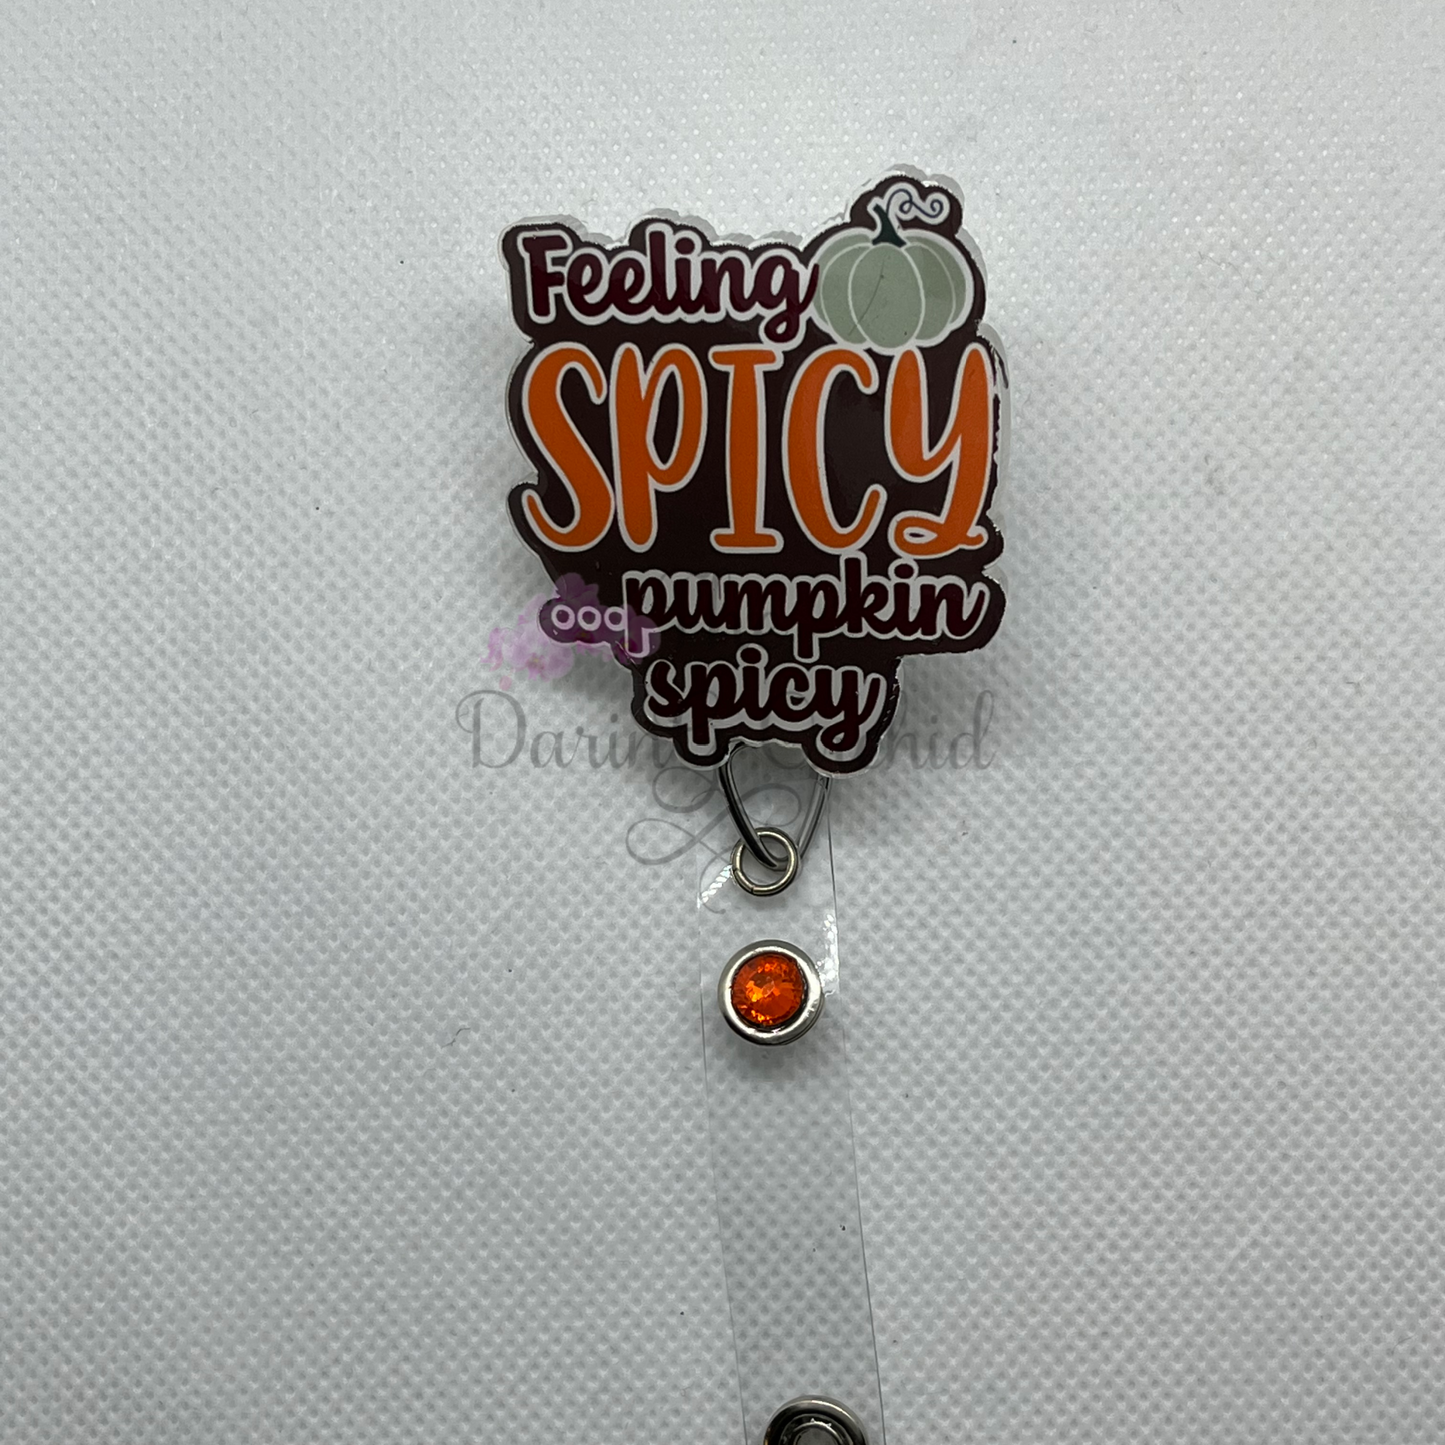 Feeling spicypumpkin spicy badge reel